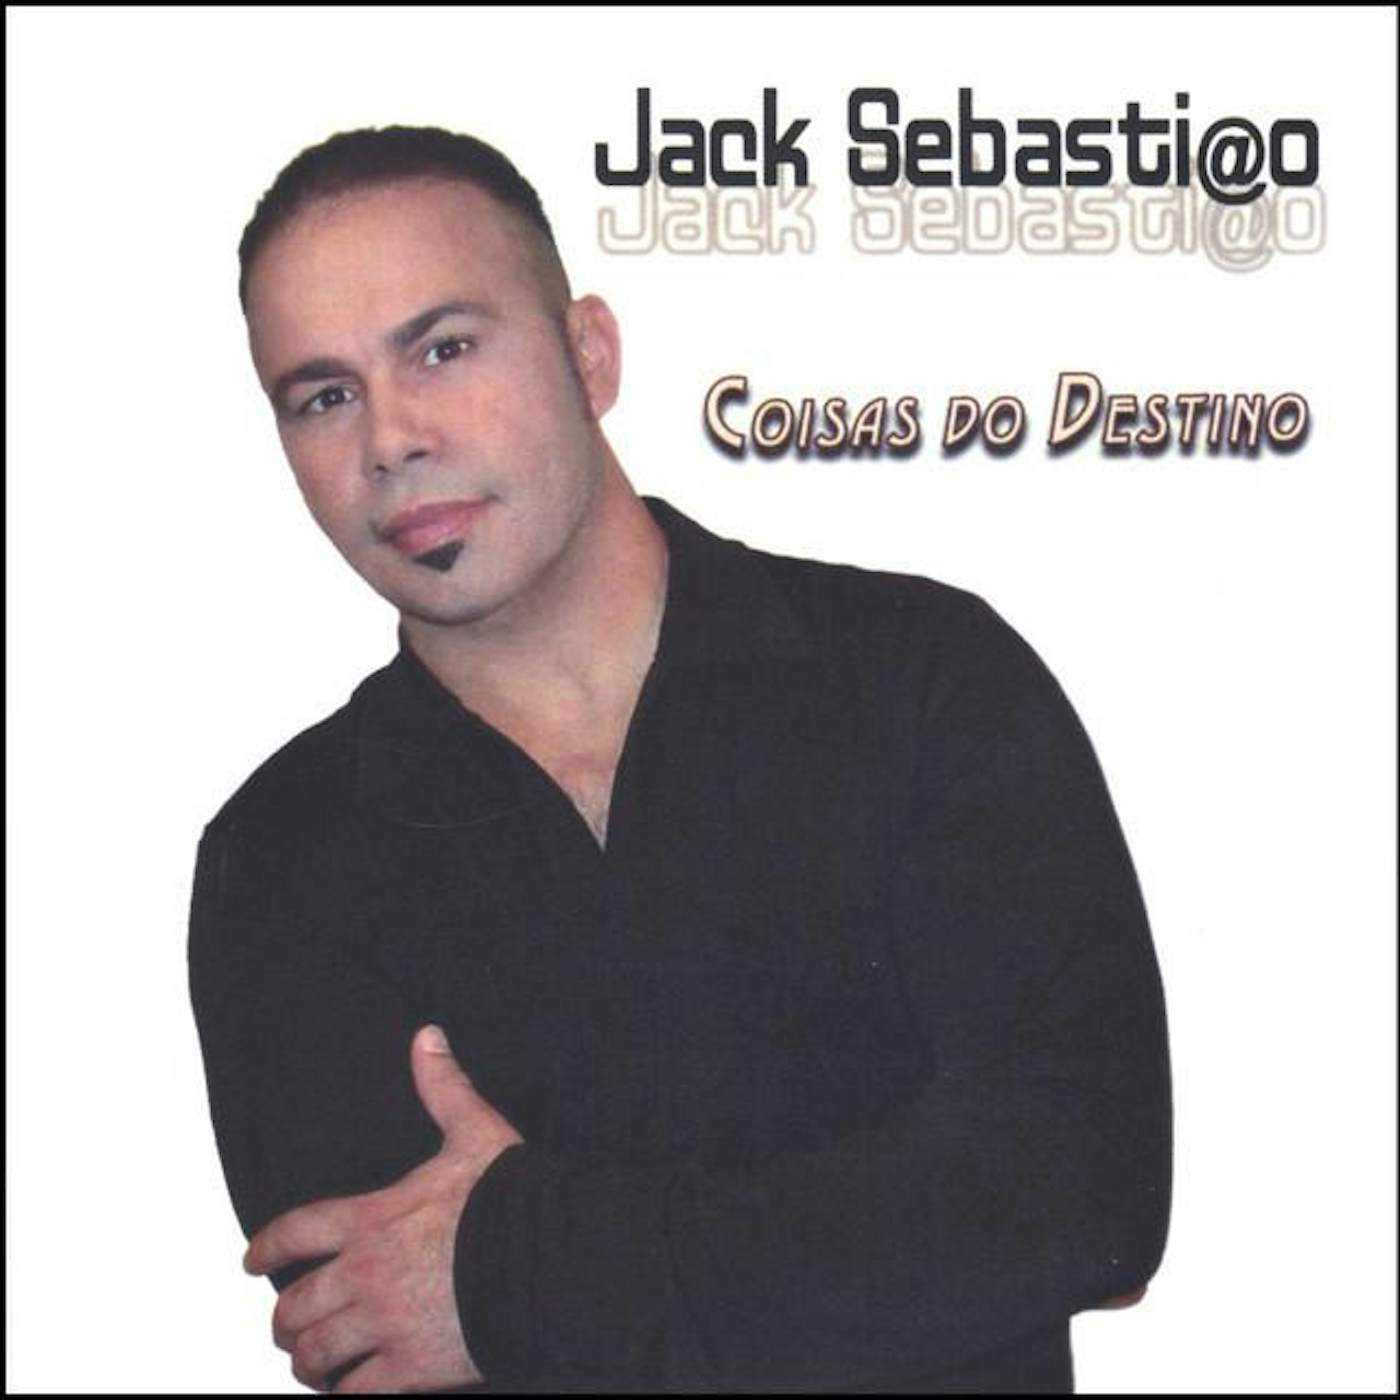 Jack Sebastiao